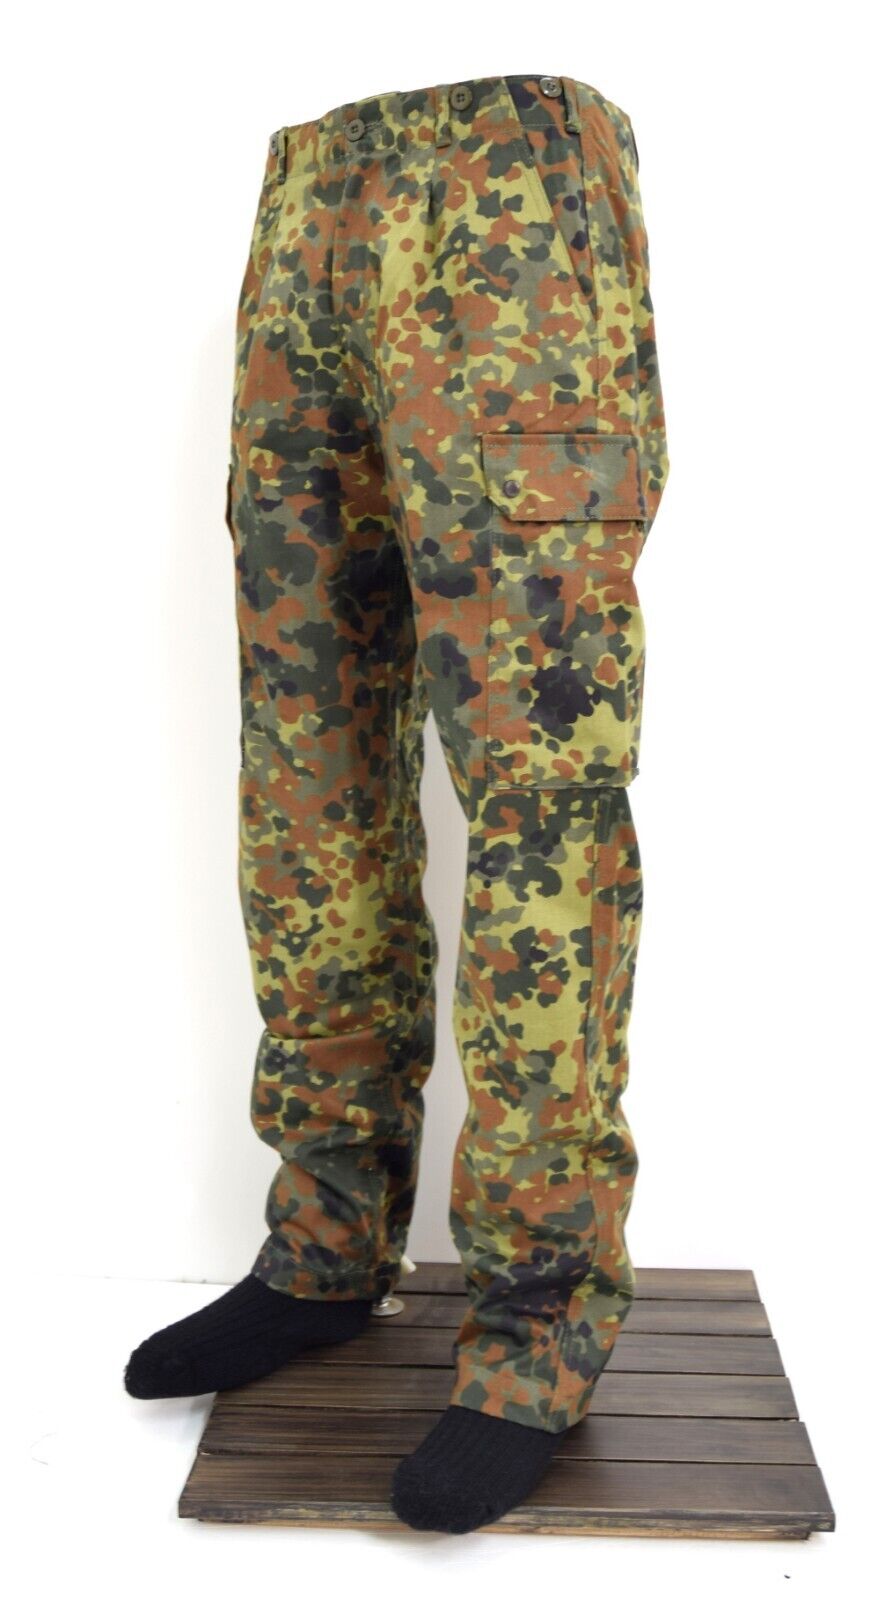 NEW German Army Combat Trousers Heavy Duty Cotton Flecktarn Camo Cargo Pants 